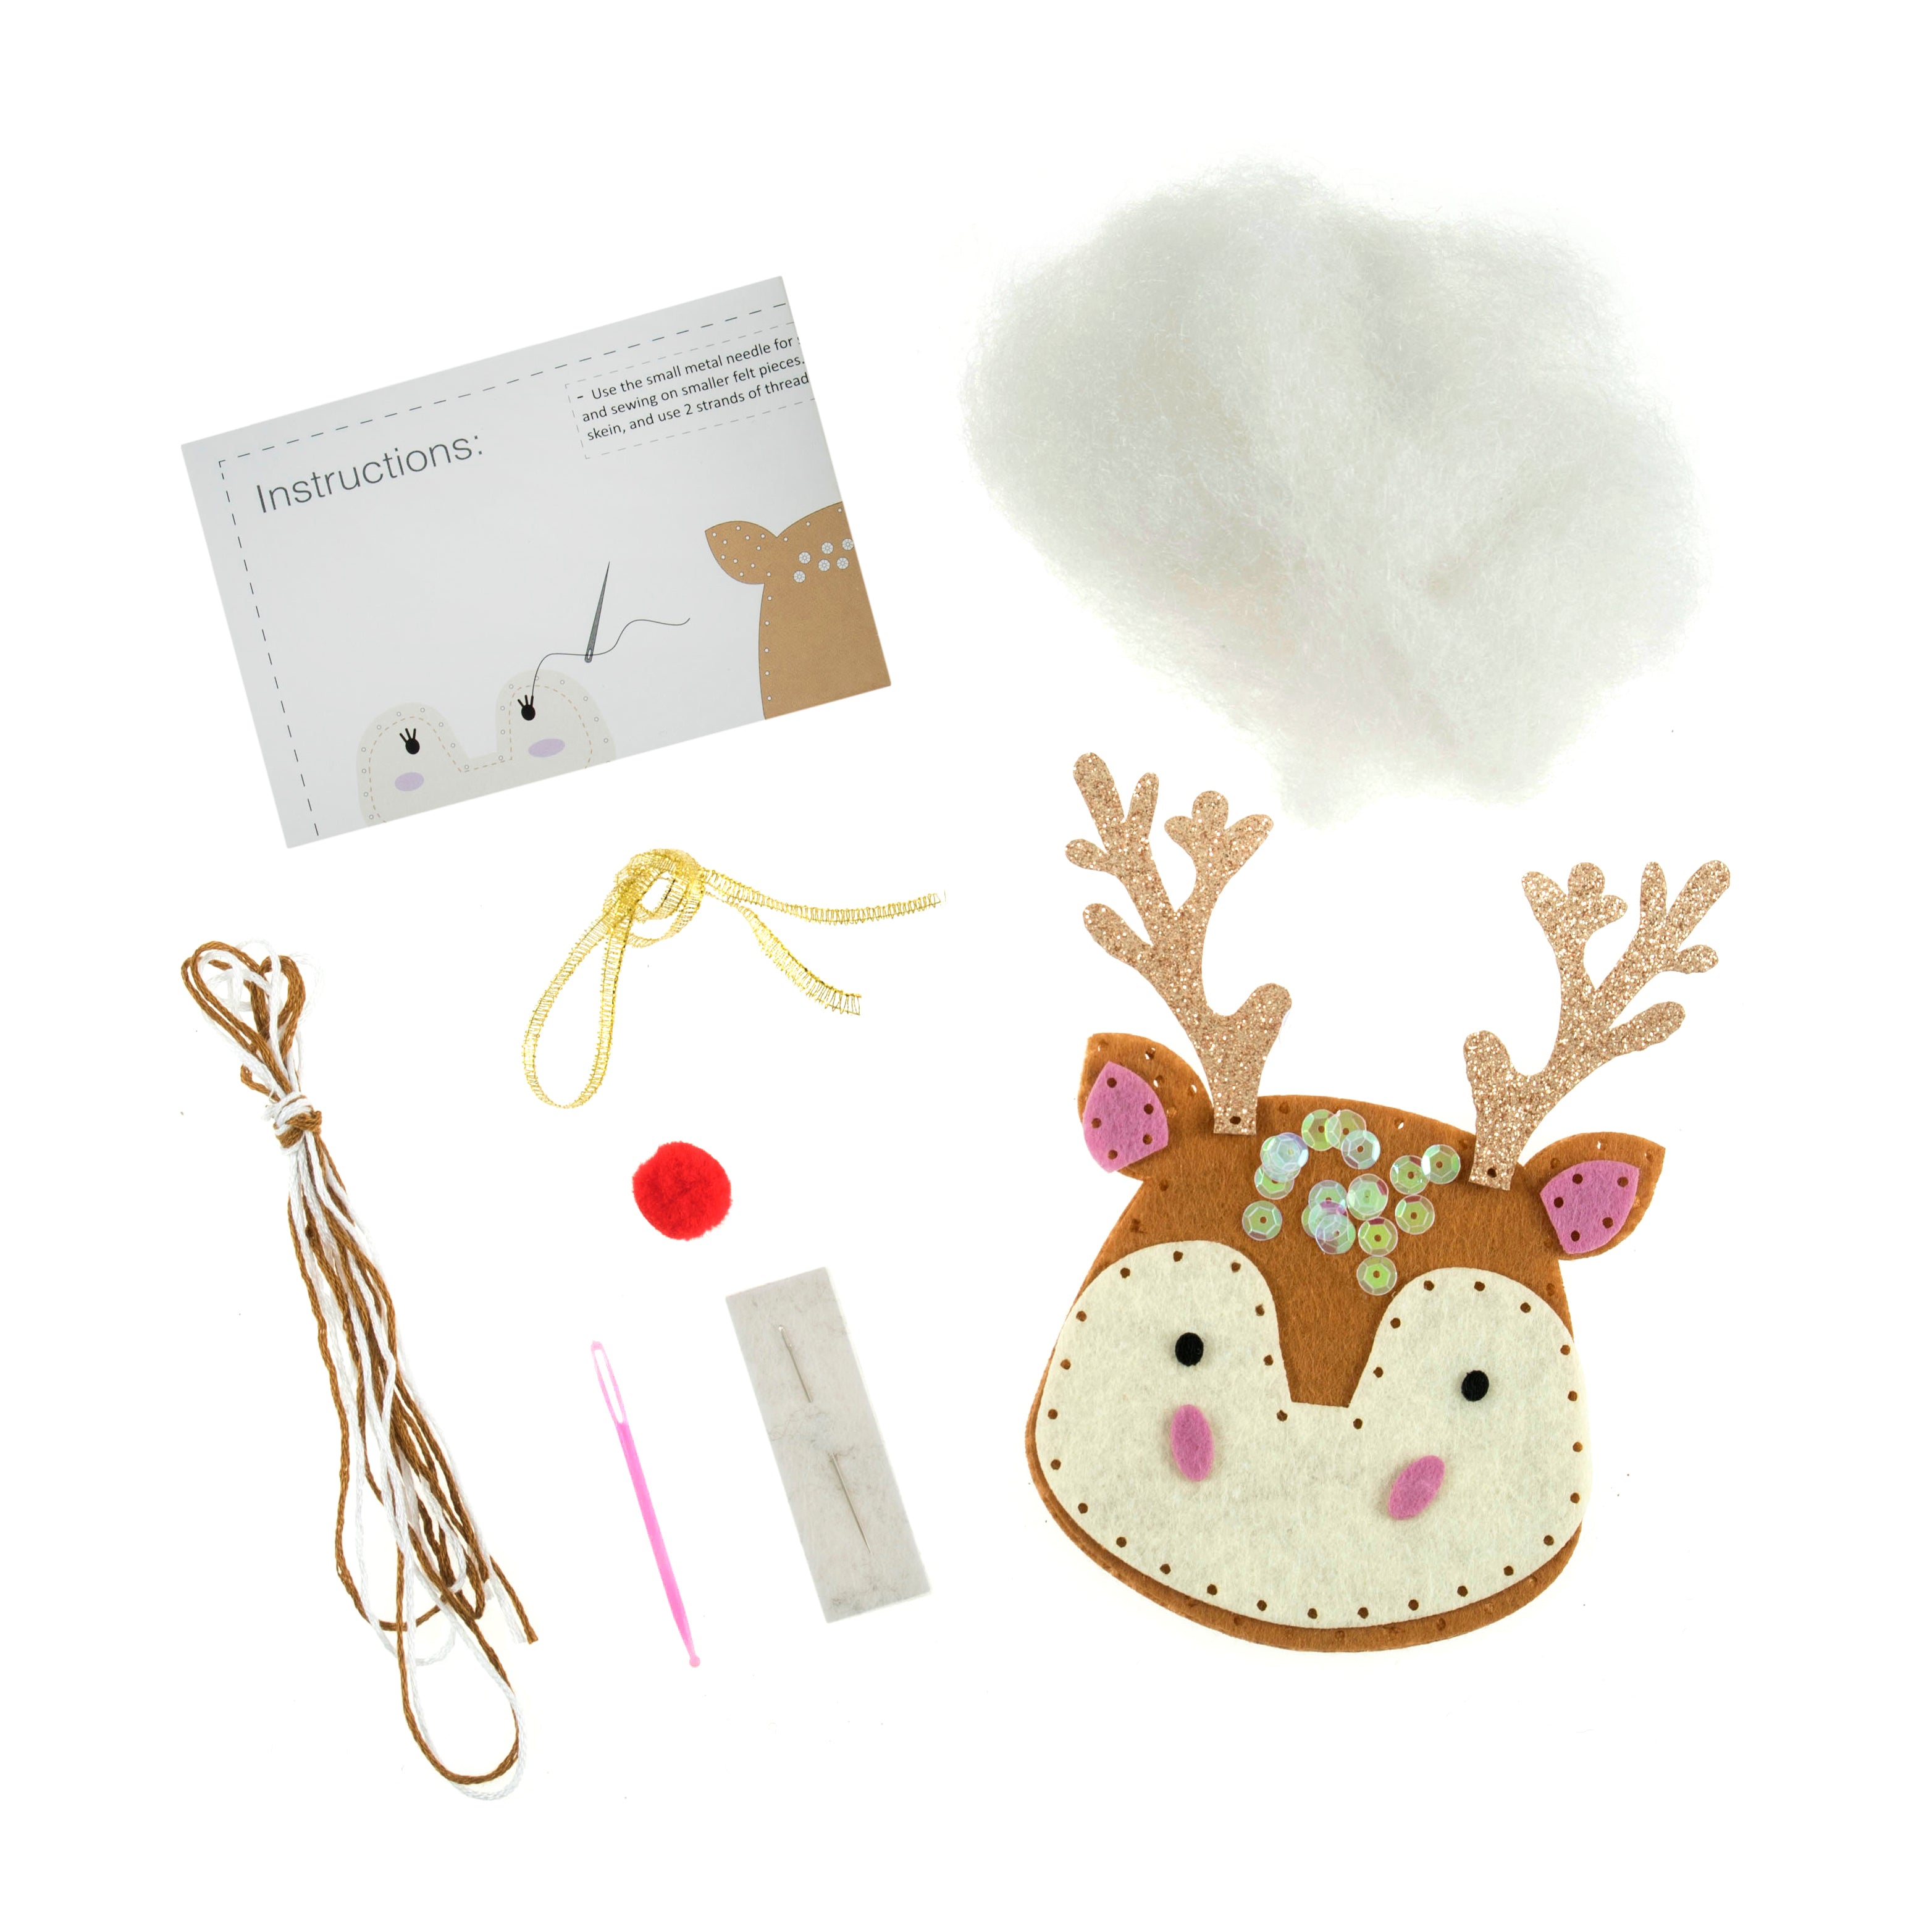 Trimits Felt Decoration Kit: Reindeer